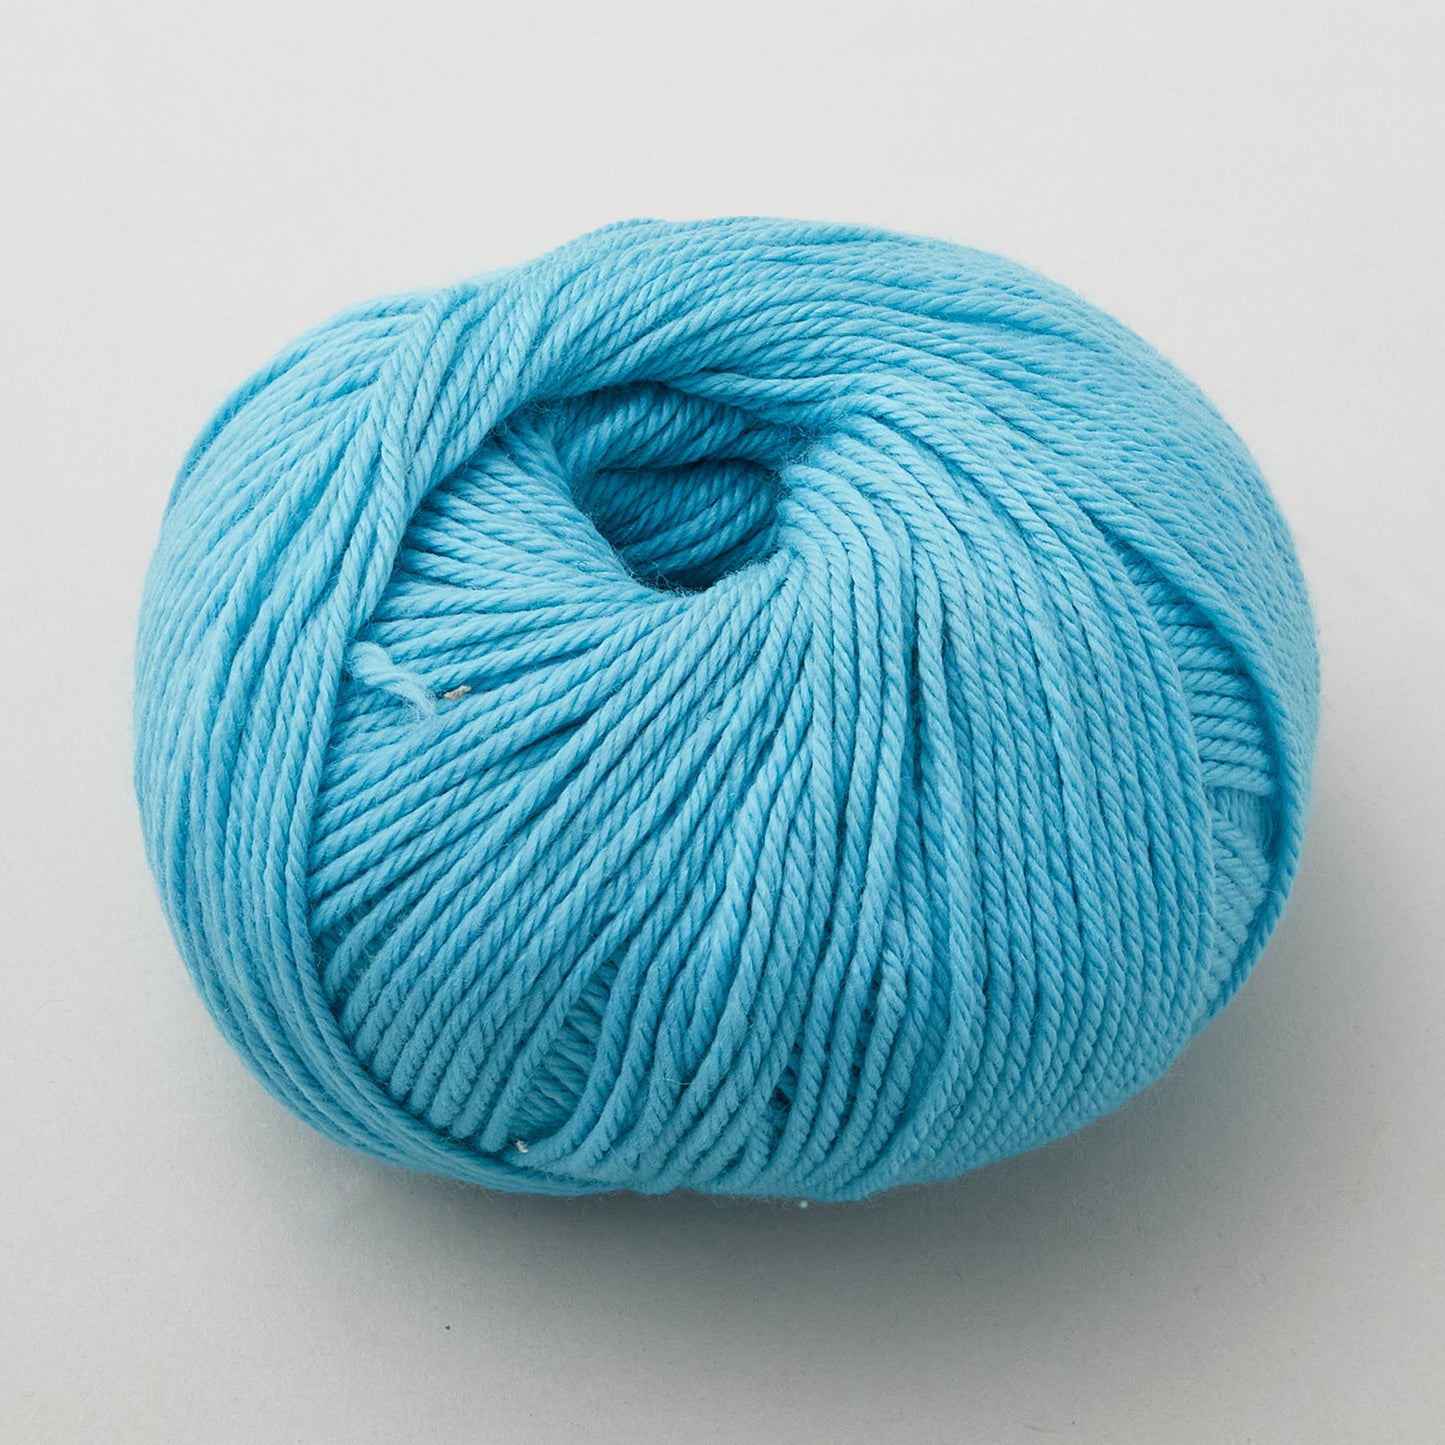 Pinwheels for Baby Blanket Knit Kit - Aquamarine Alternative View #1